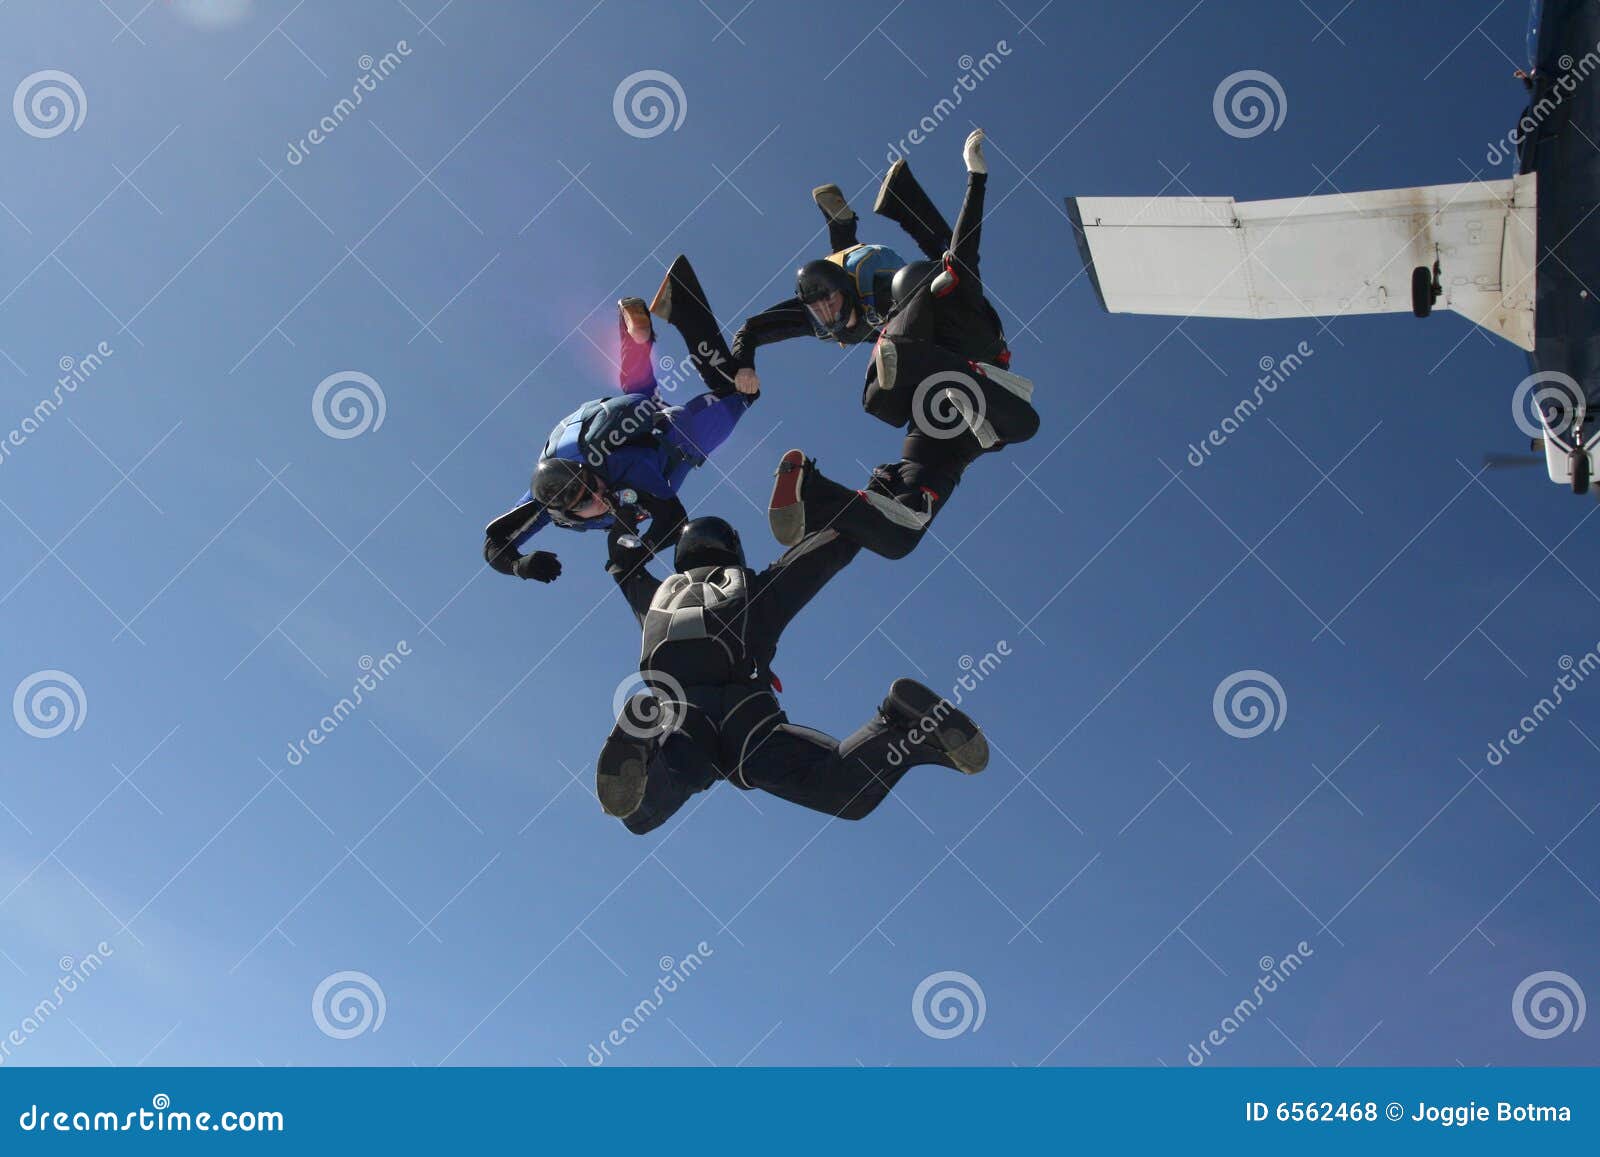 four skydivers exit a plane